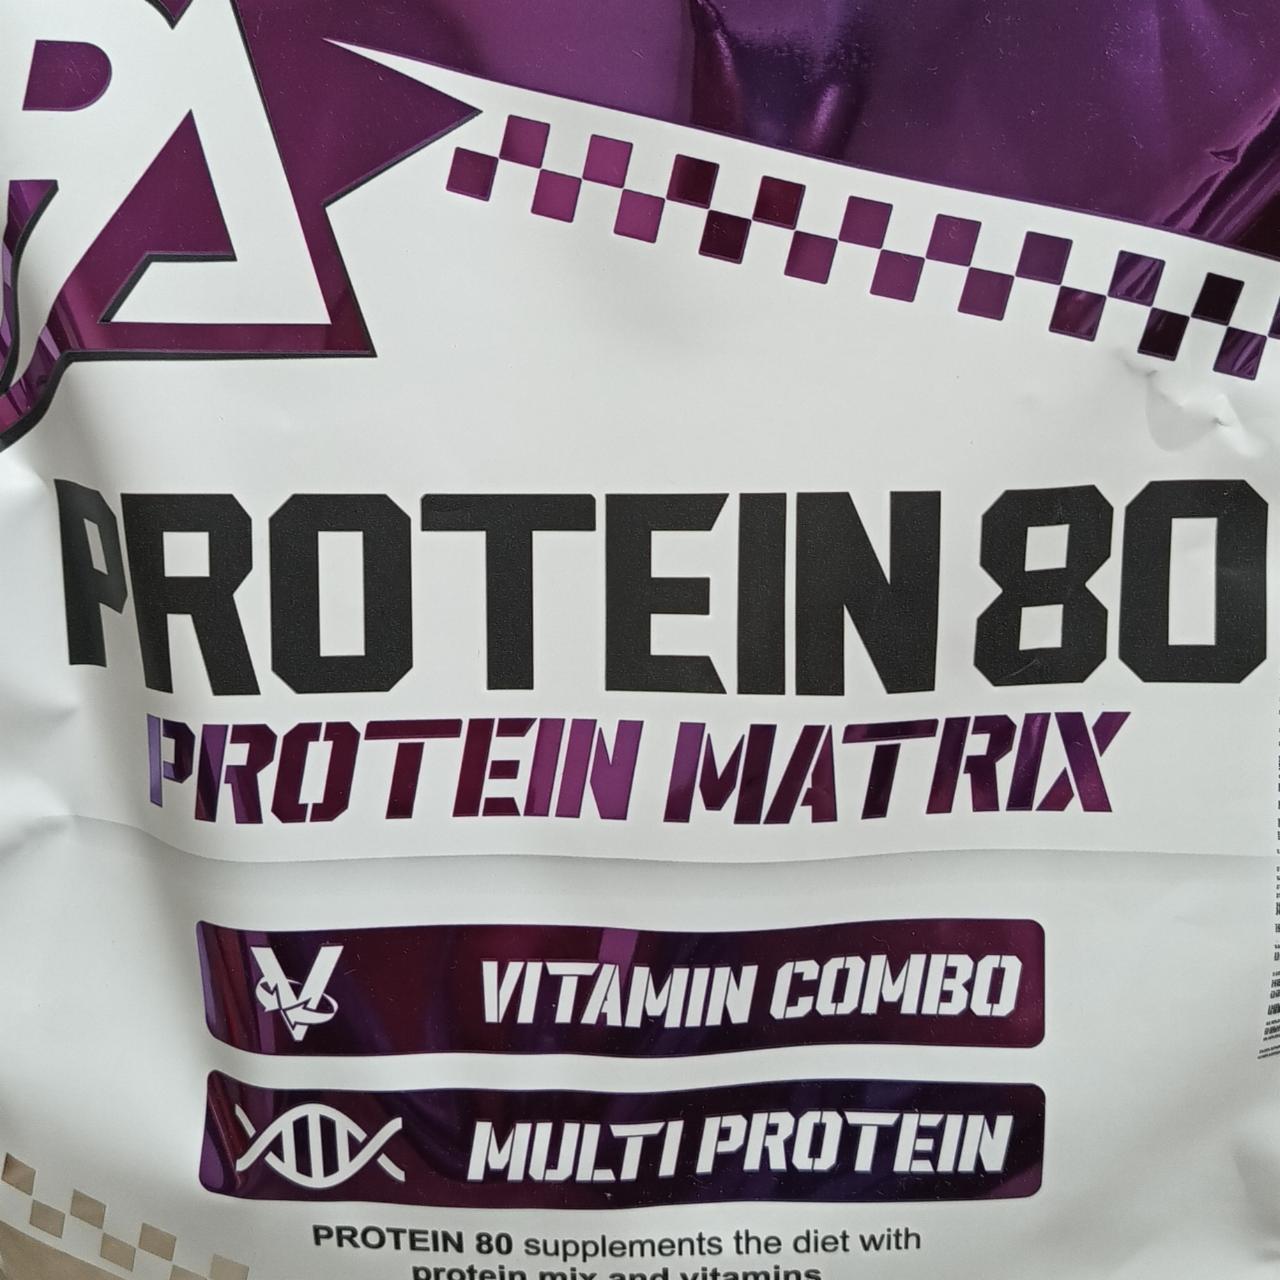 Zdjęcia - Protein 80 Protein matrix Proactive